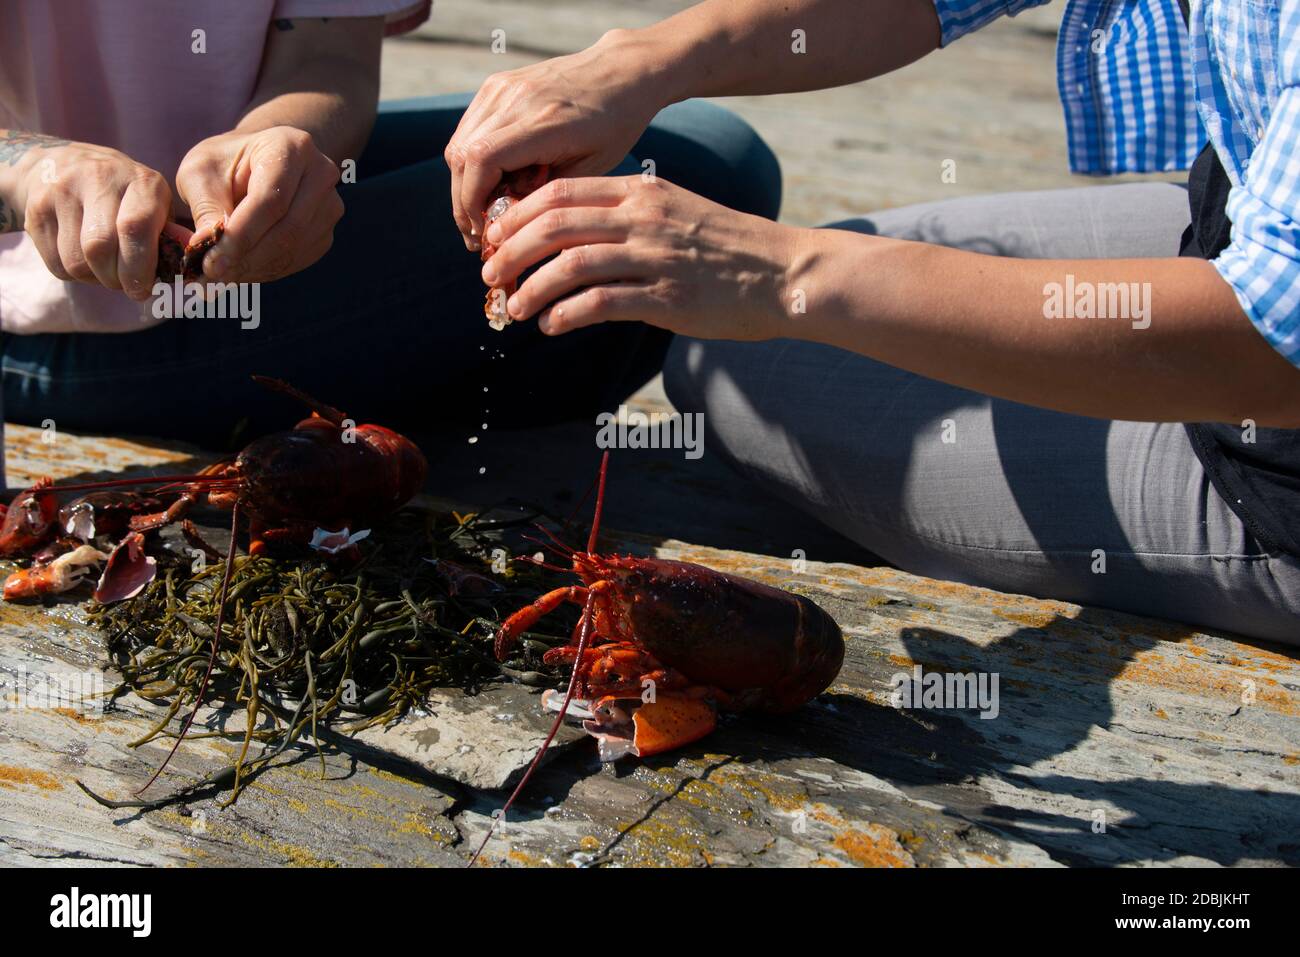 Maine lobster bake Stock Photo